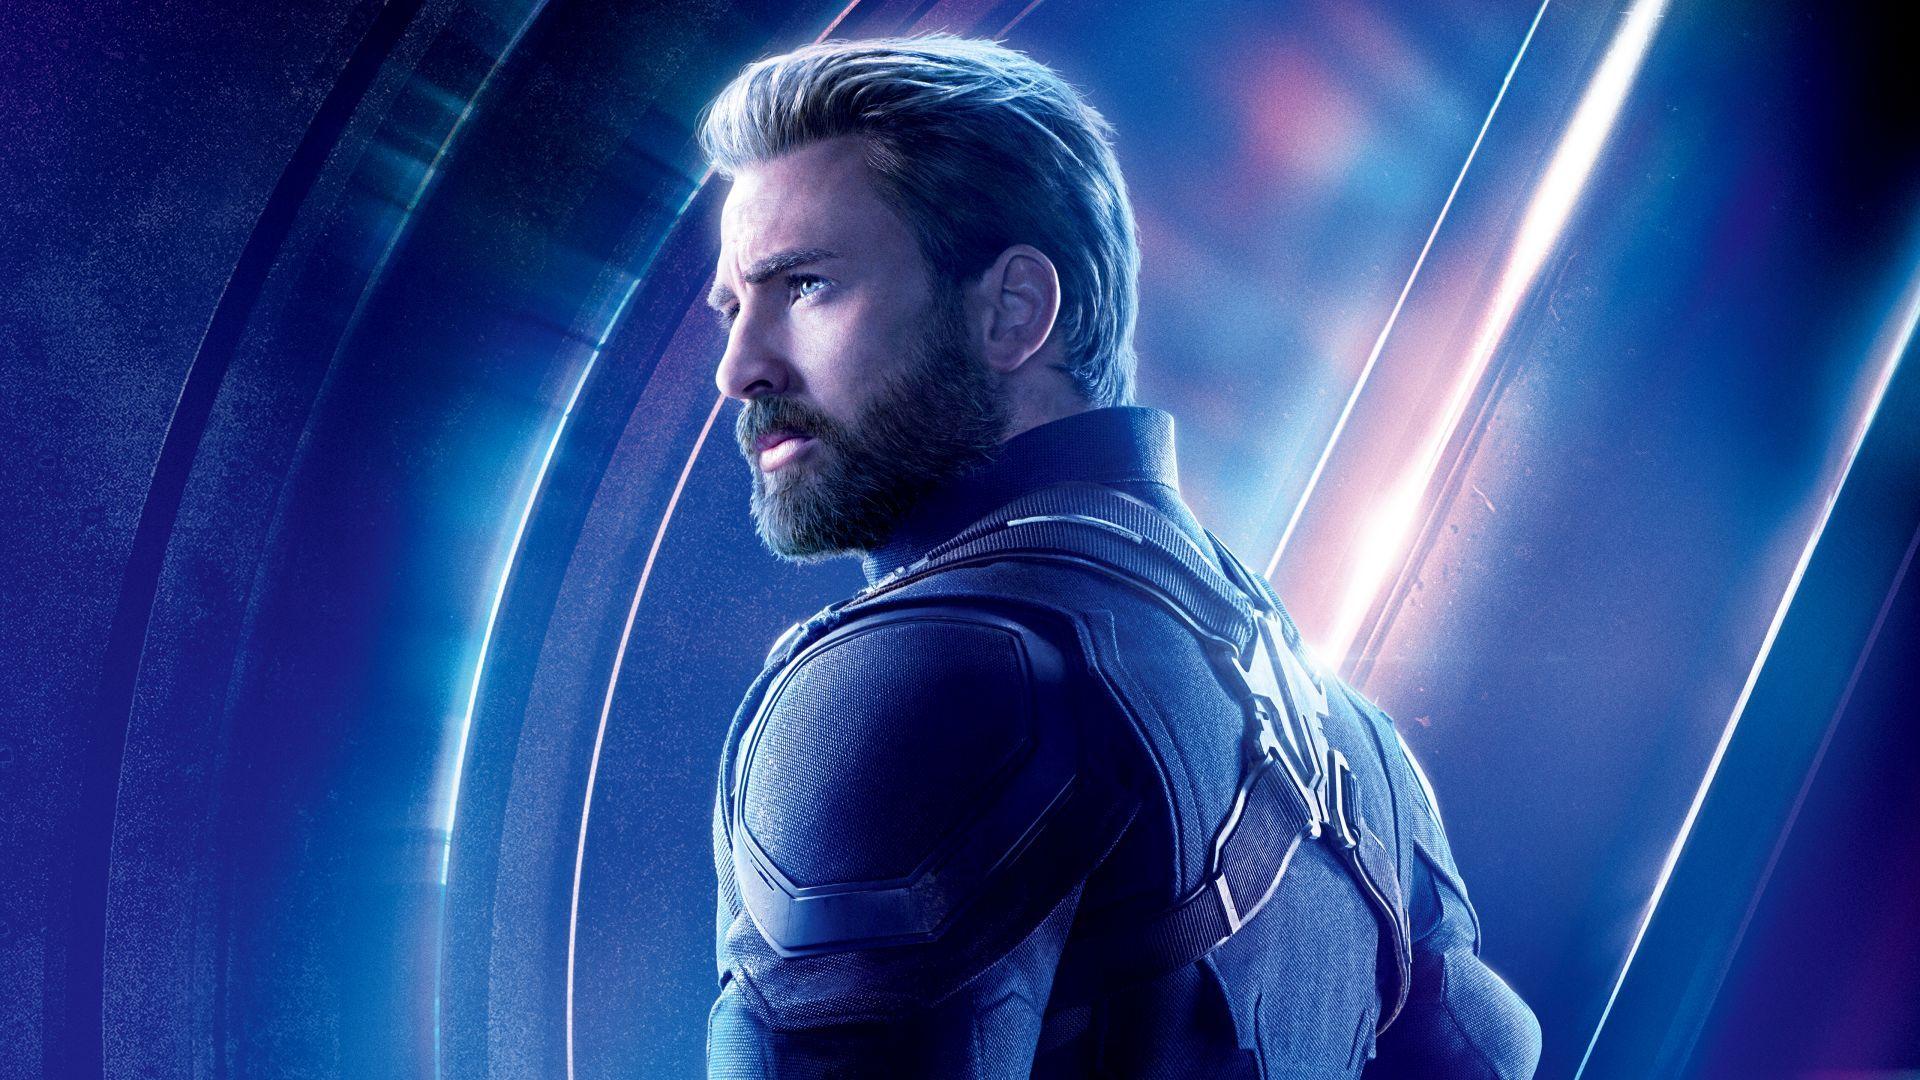 Download wallpaper of Avengers: Infinity War, Chris Evans, Steve